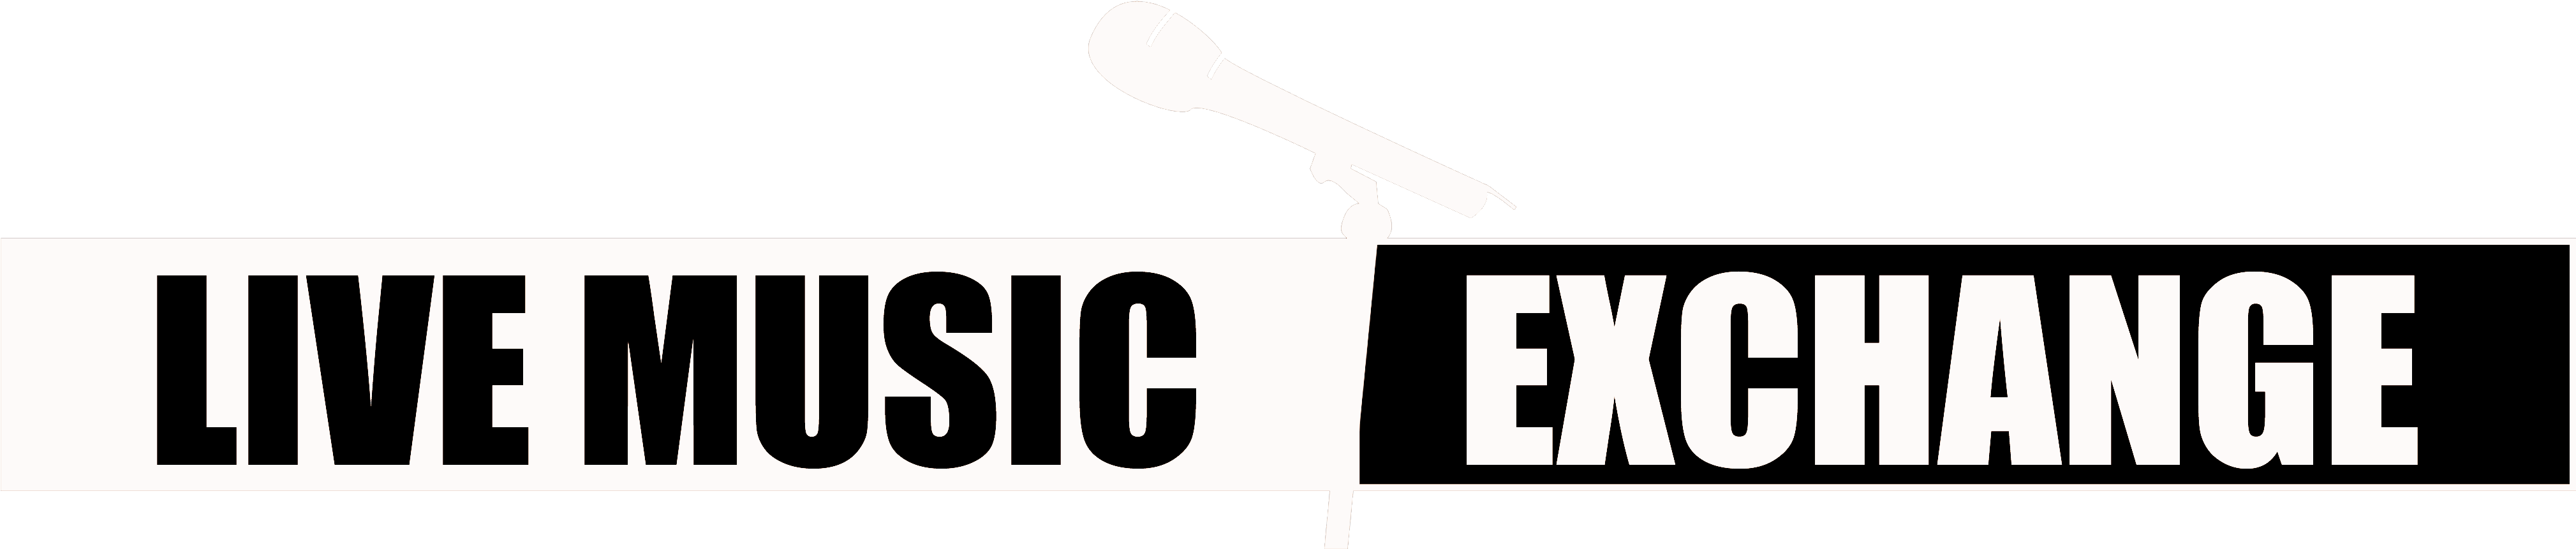 Live Music Exchange Logo PNG